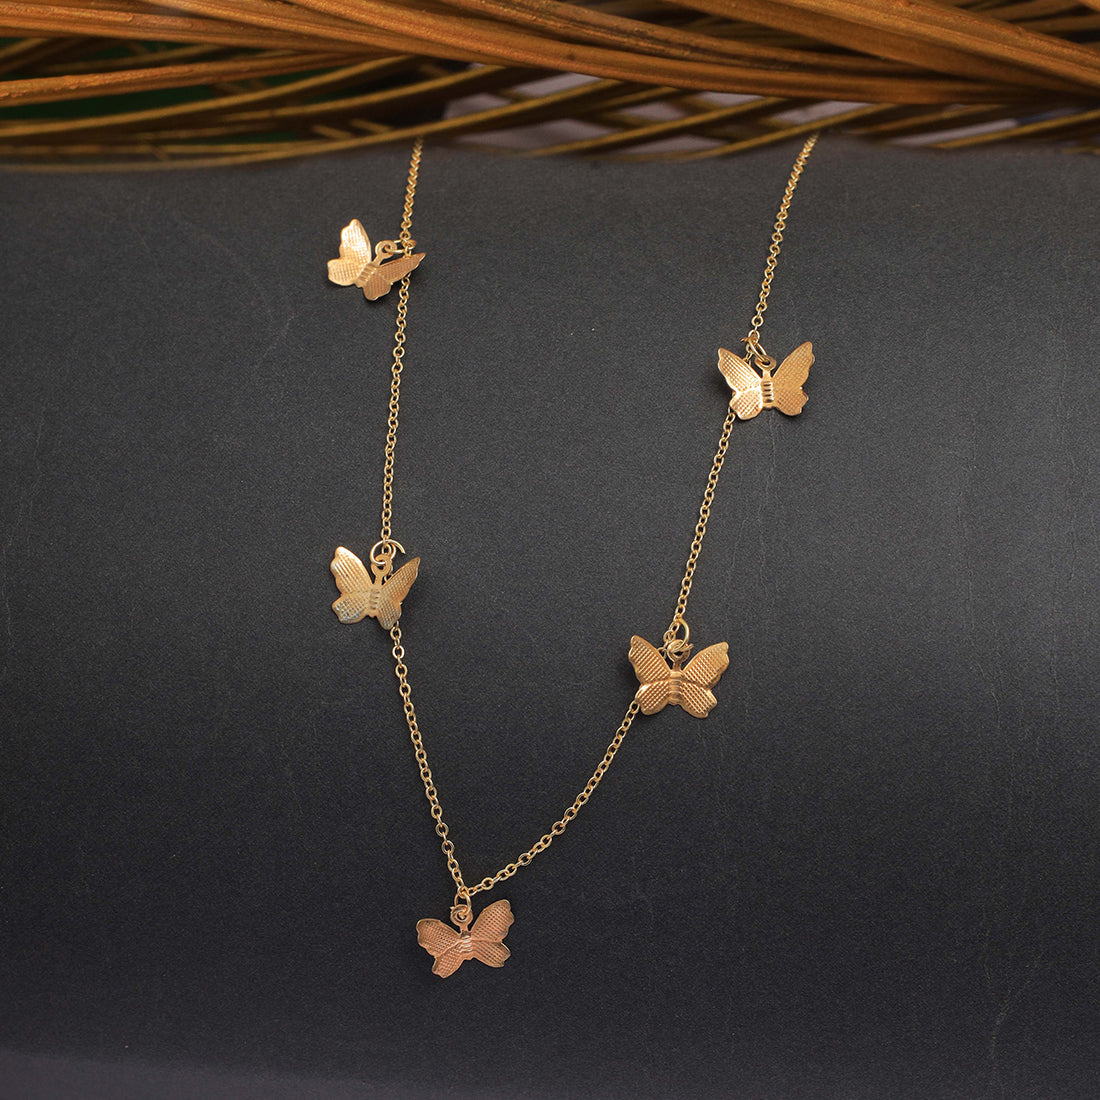 Butterfluies Single Layer Dainty Gold Necklace - Multiple Flying Butterflies